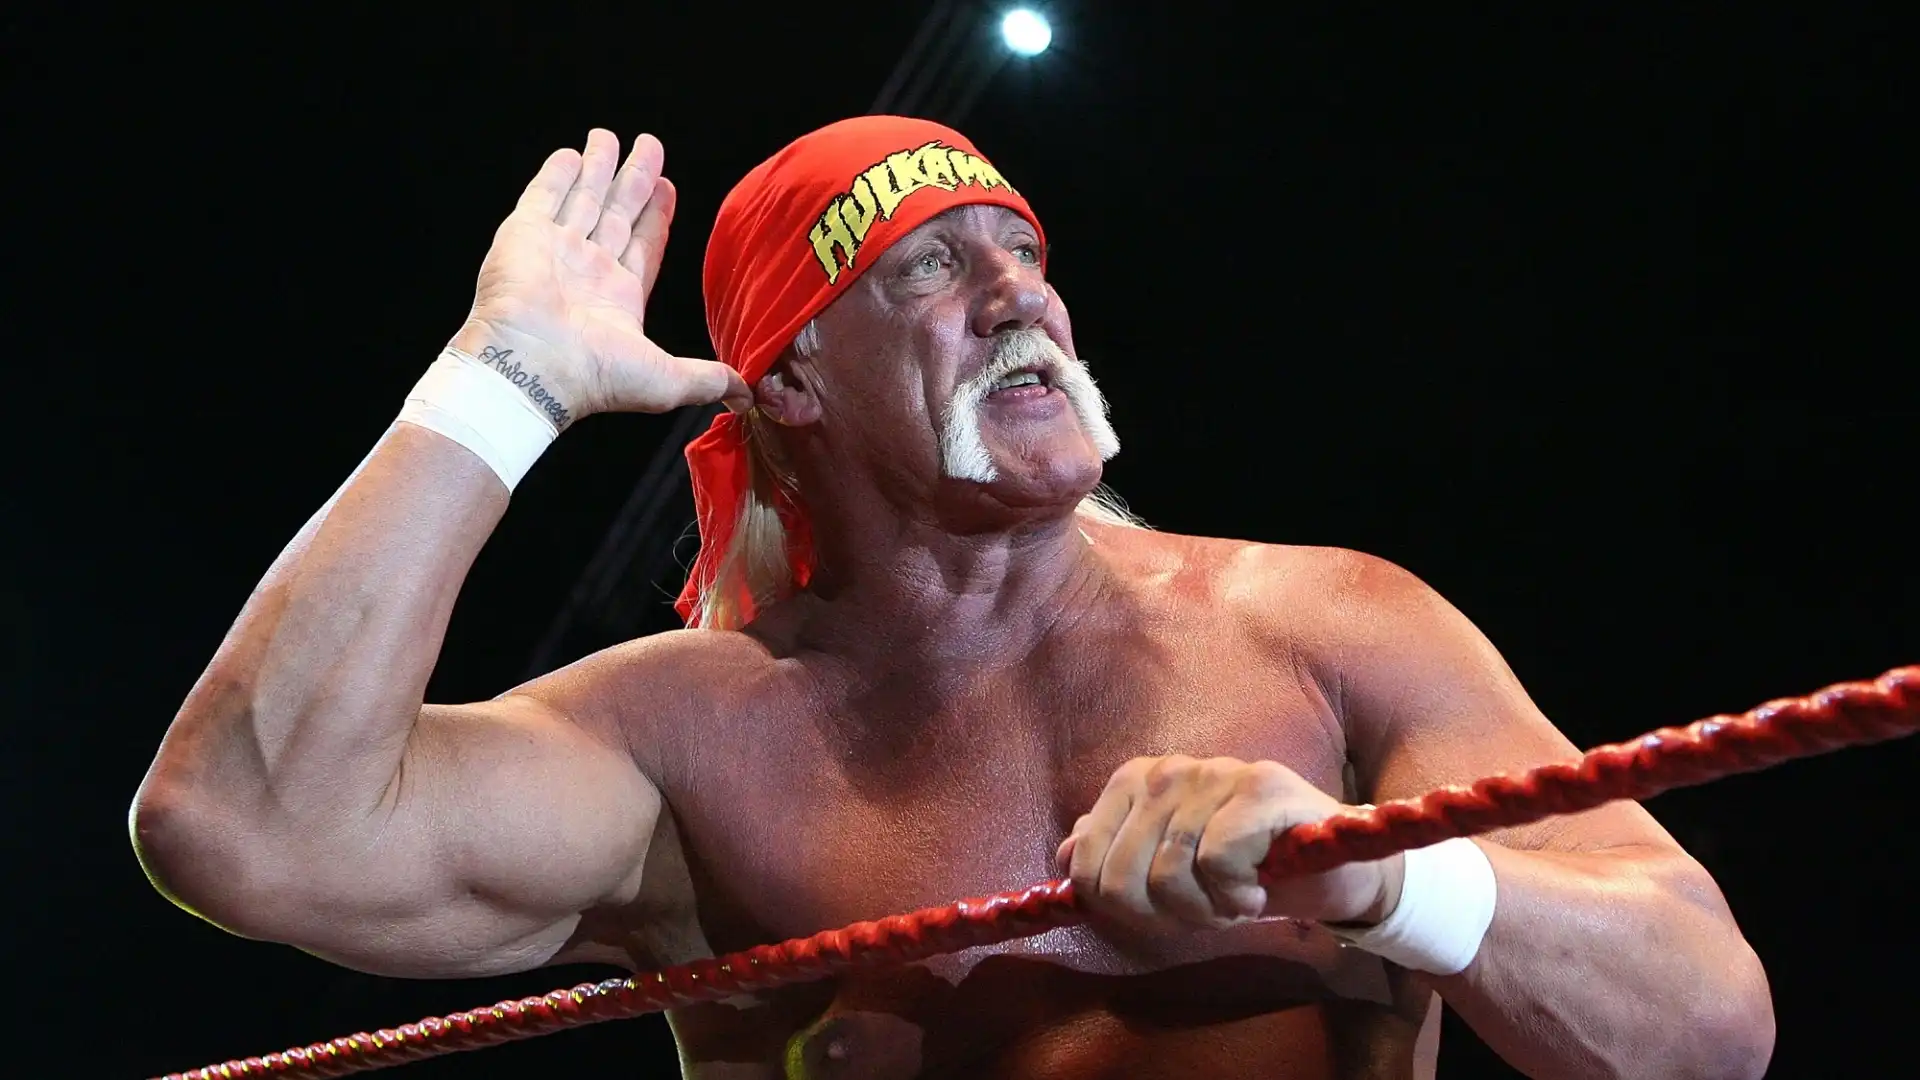 Hulk Hogan: patrimonio netto stimato 25 milioni di dollari